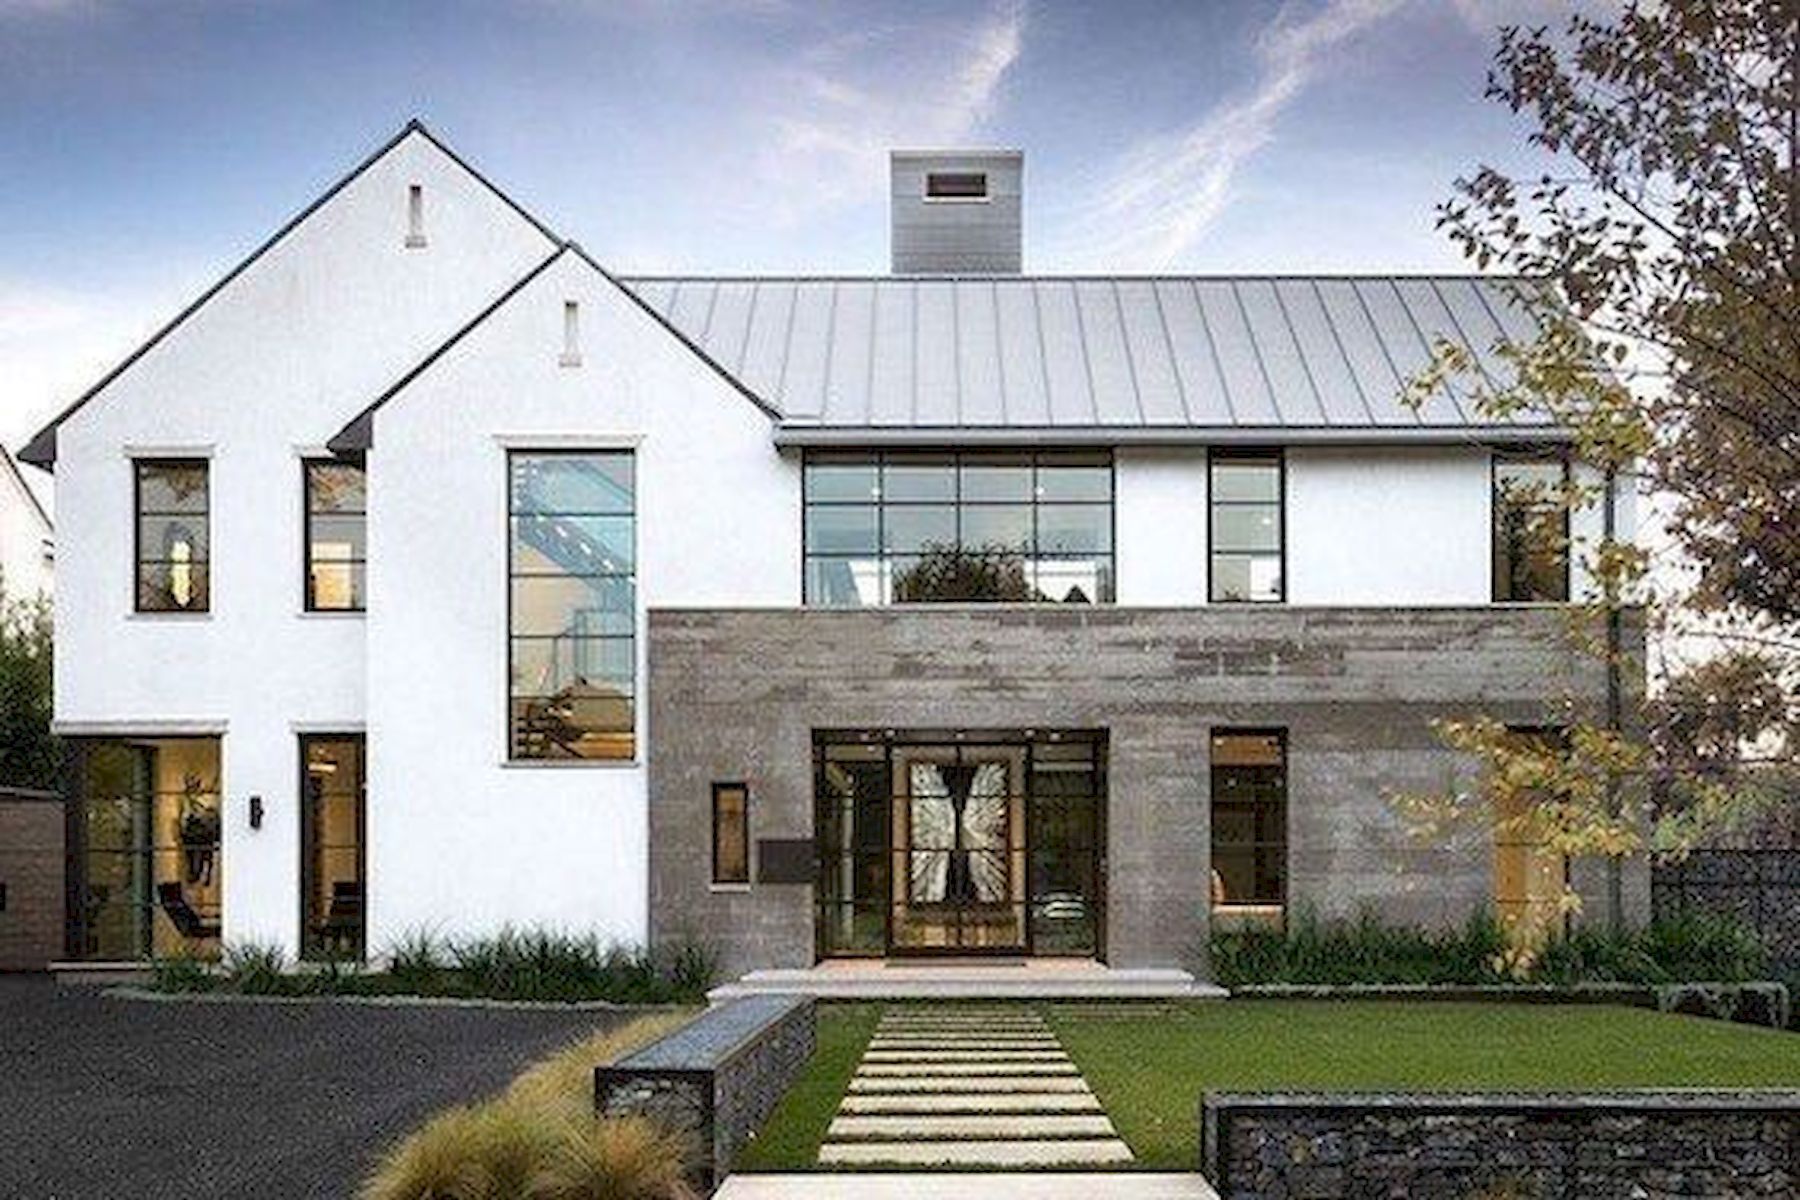 33 Best Modern Farmhouse Exterior House Plans Design Ideas Trend In